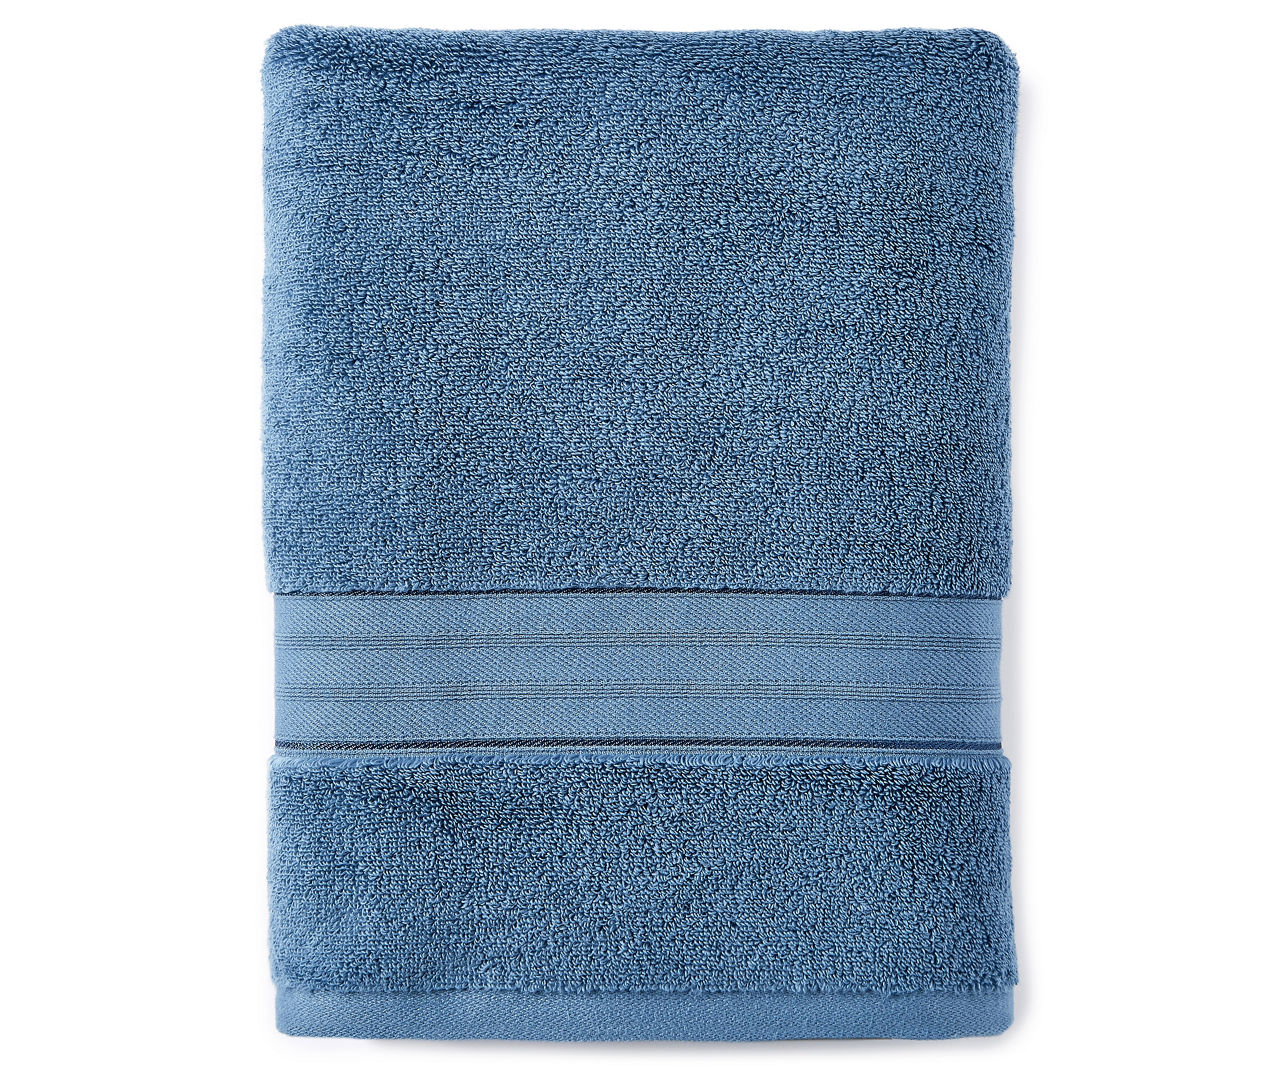 LC BATH TOWEL CORONET BLUE